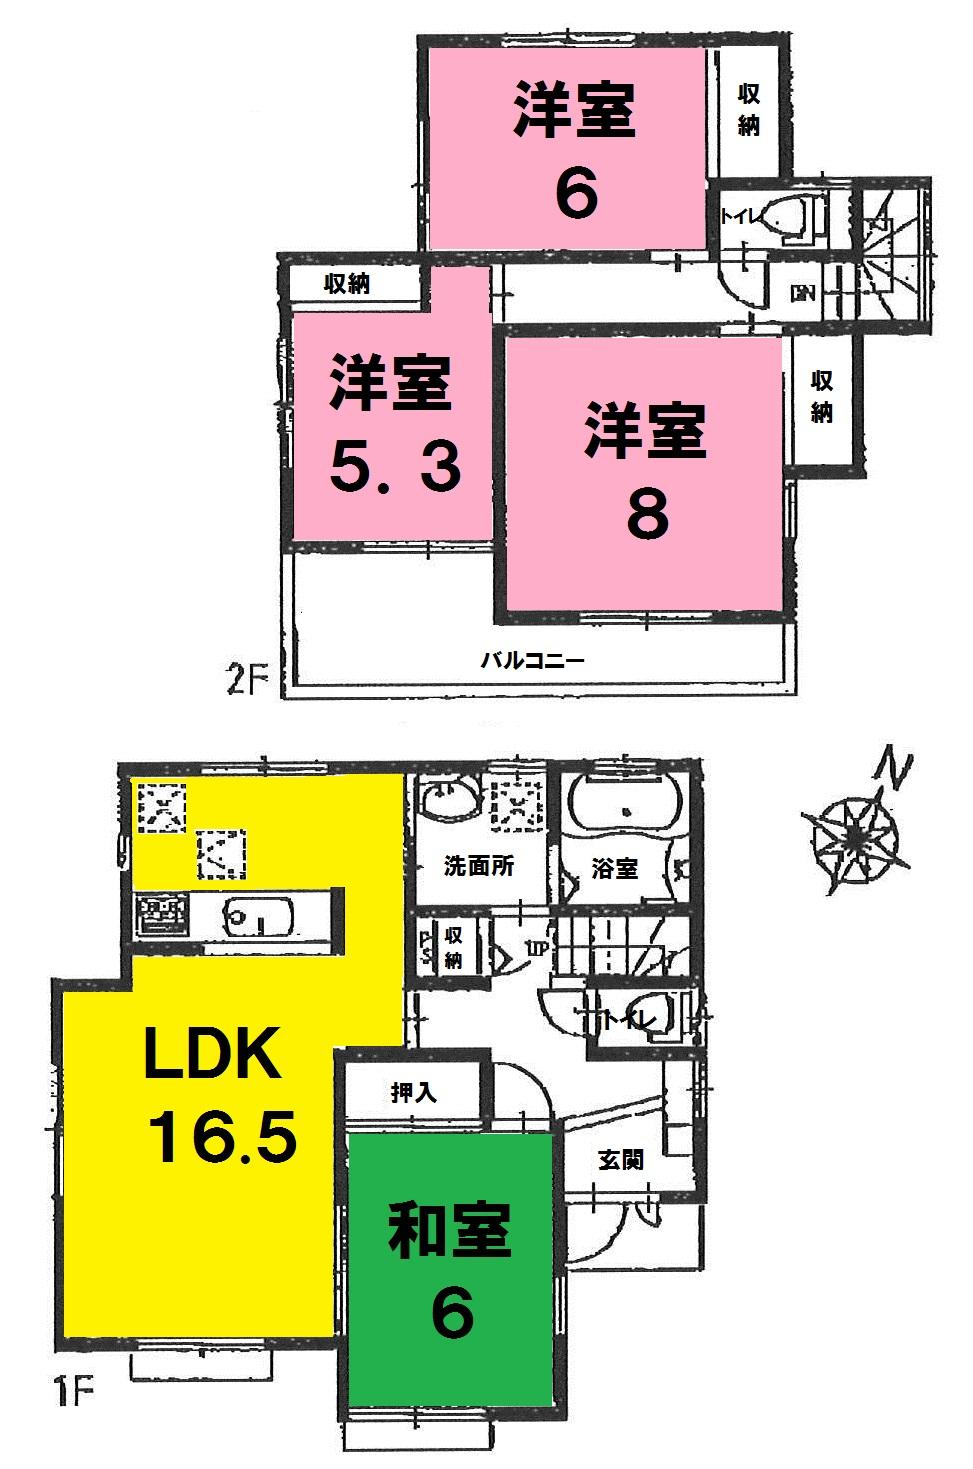 Floor plan. 33,800,000 yen, 4LDK, Land area 176.06 sq m , Building area 100.19 sq m